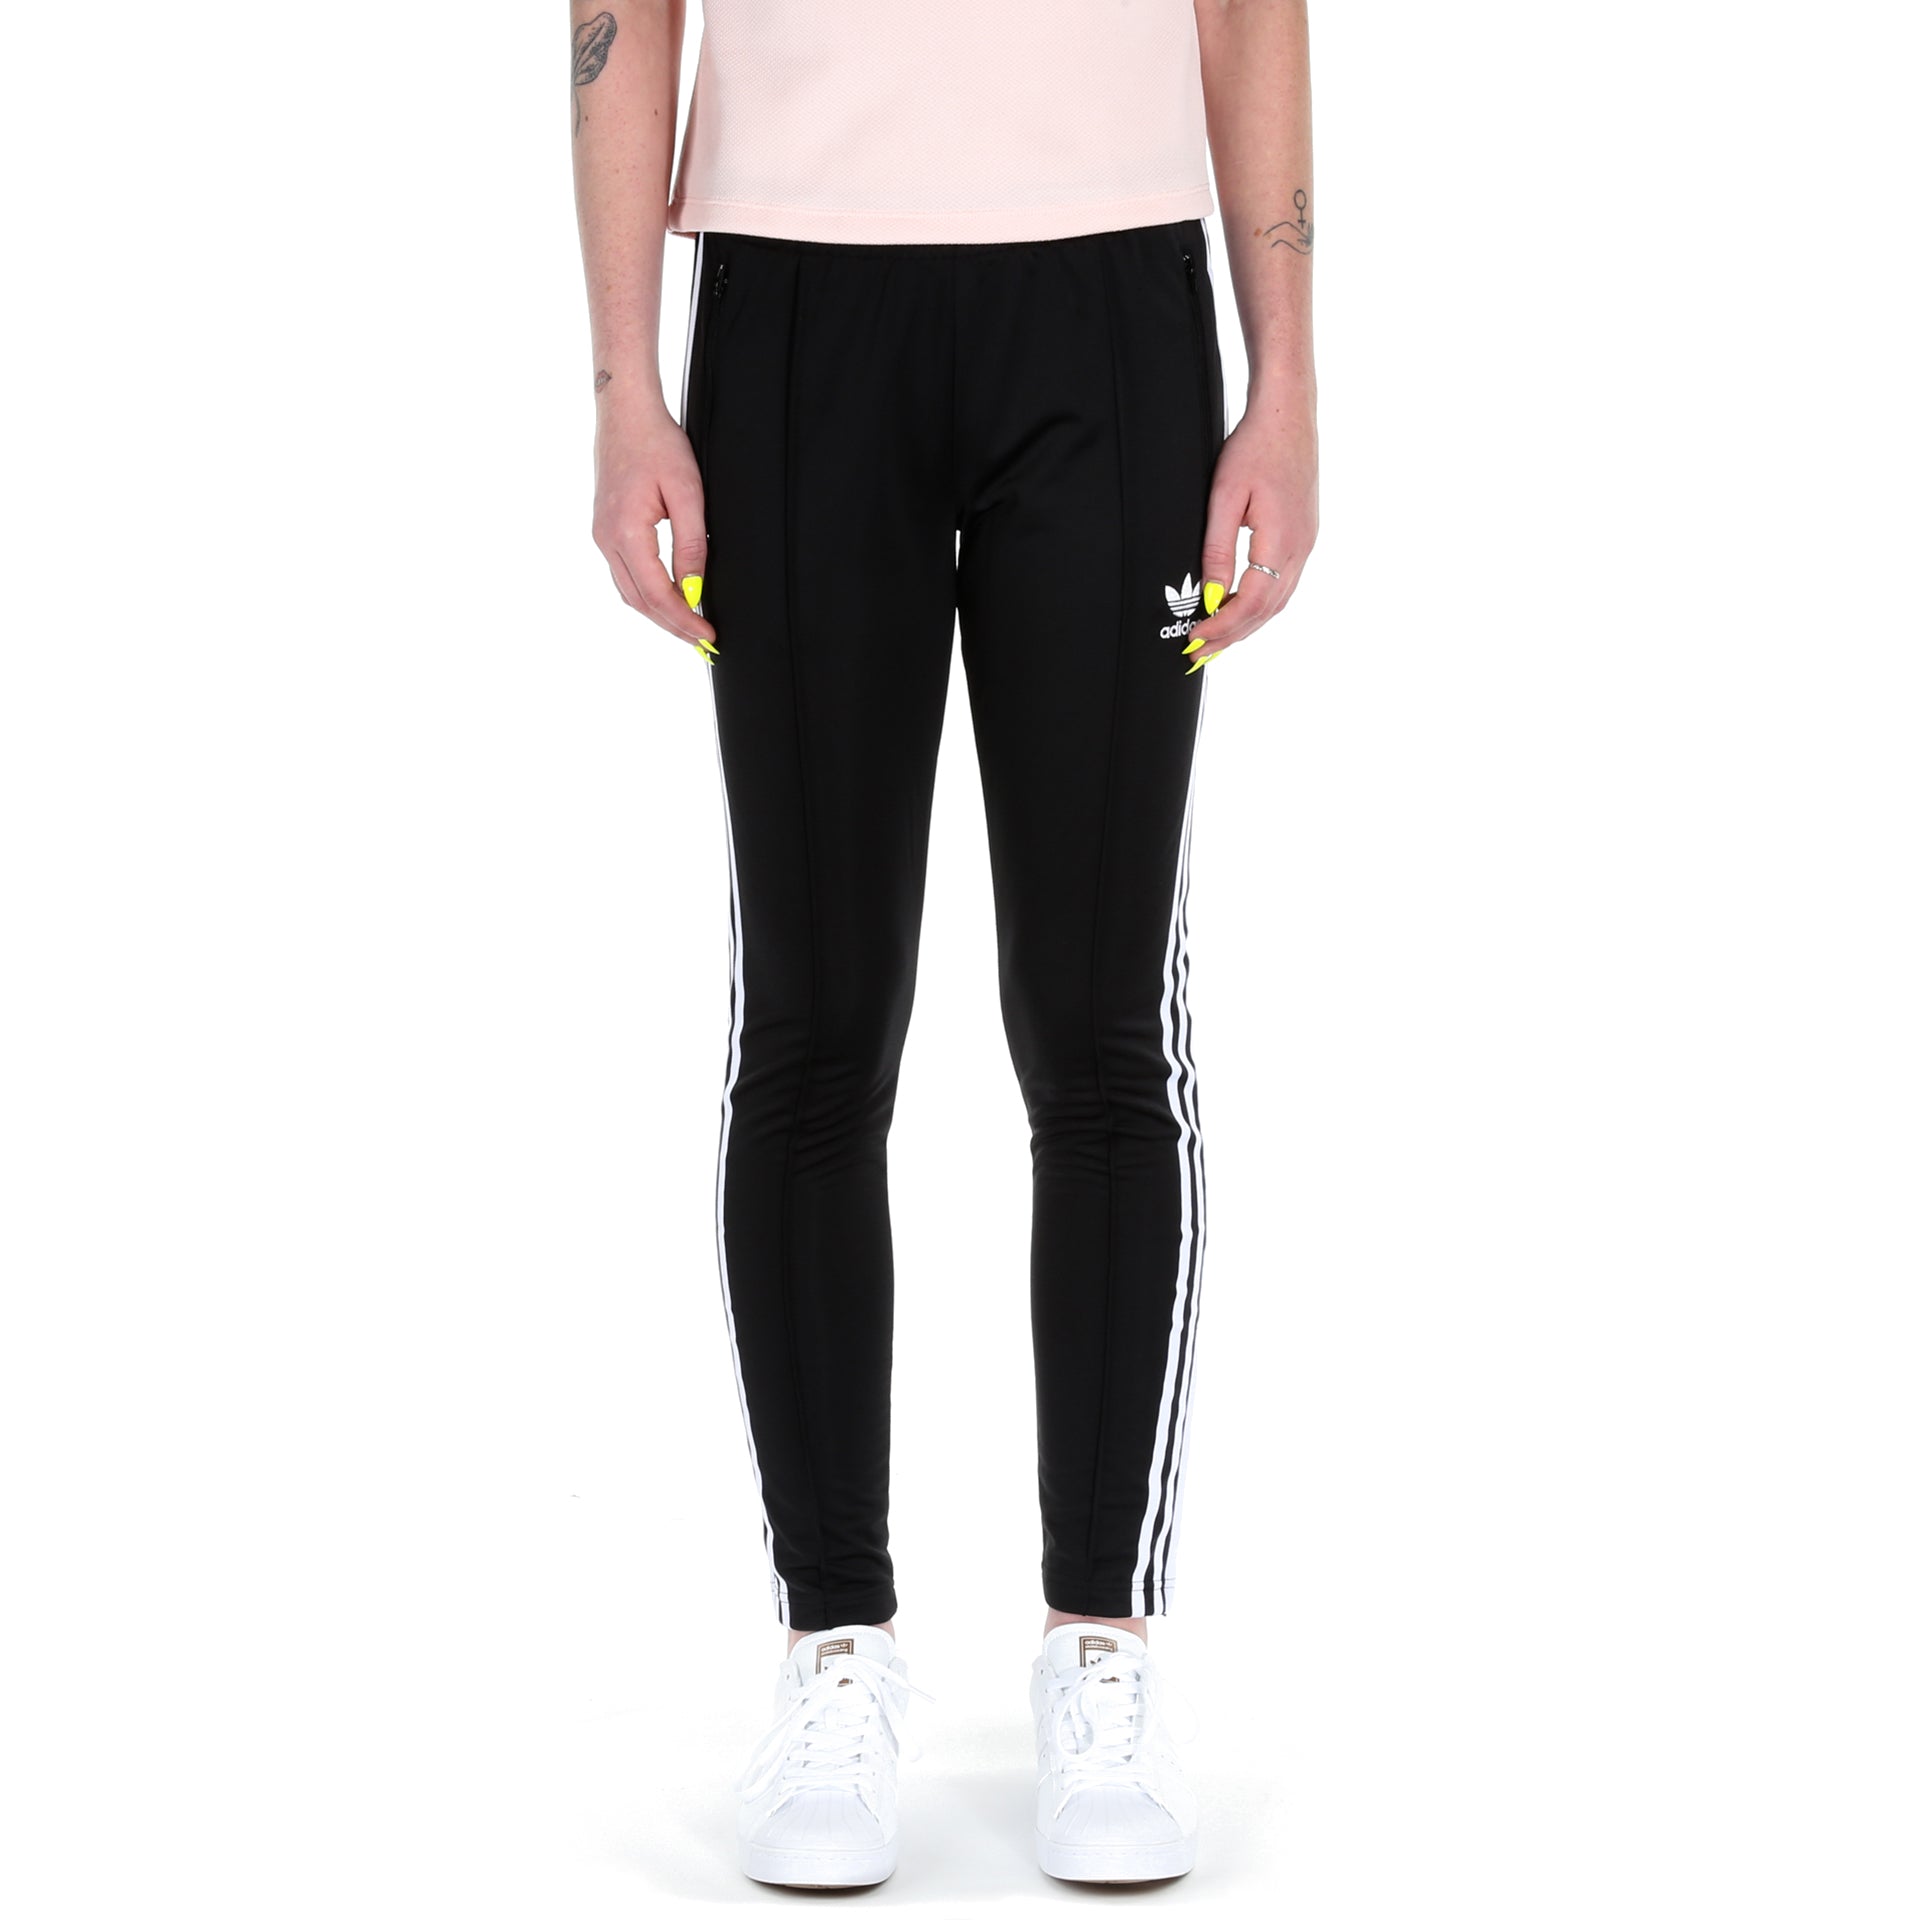 Adidas Superstar Track Pants - Black - New Star